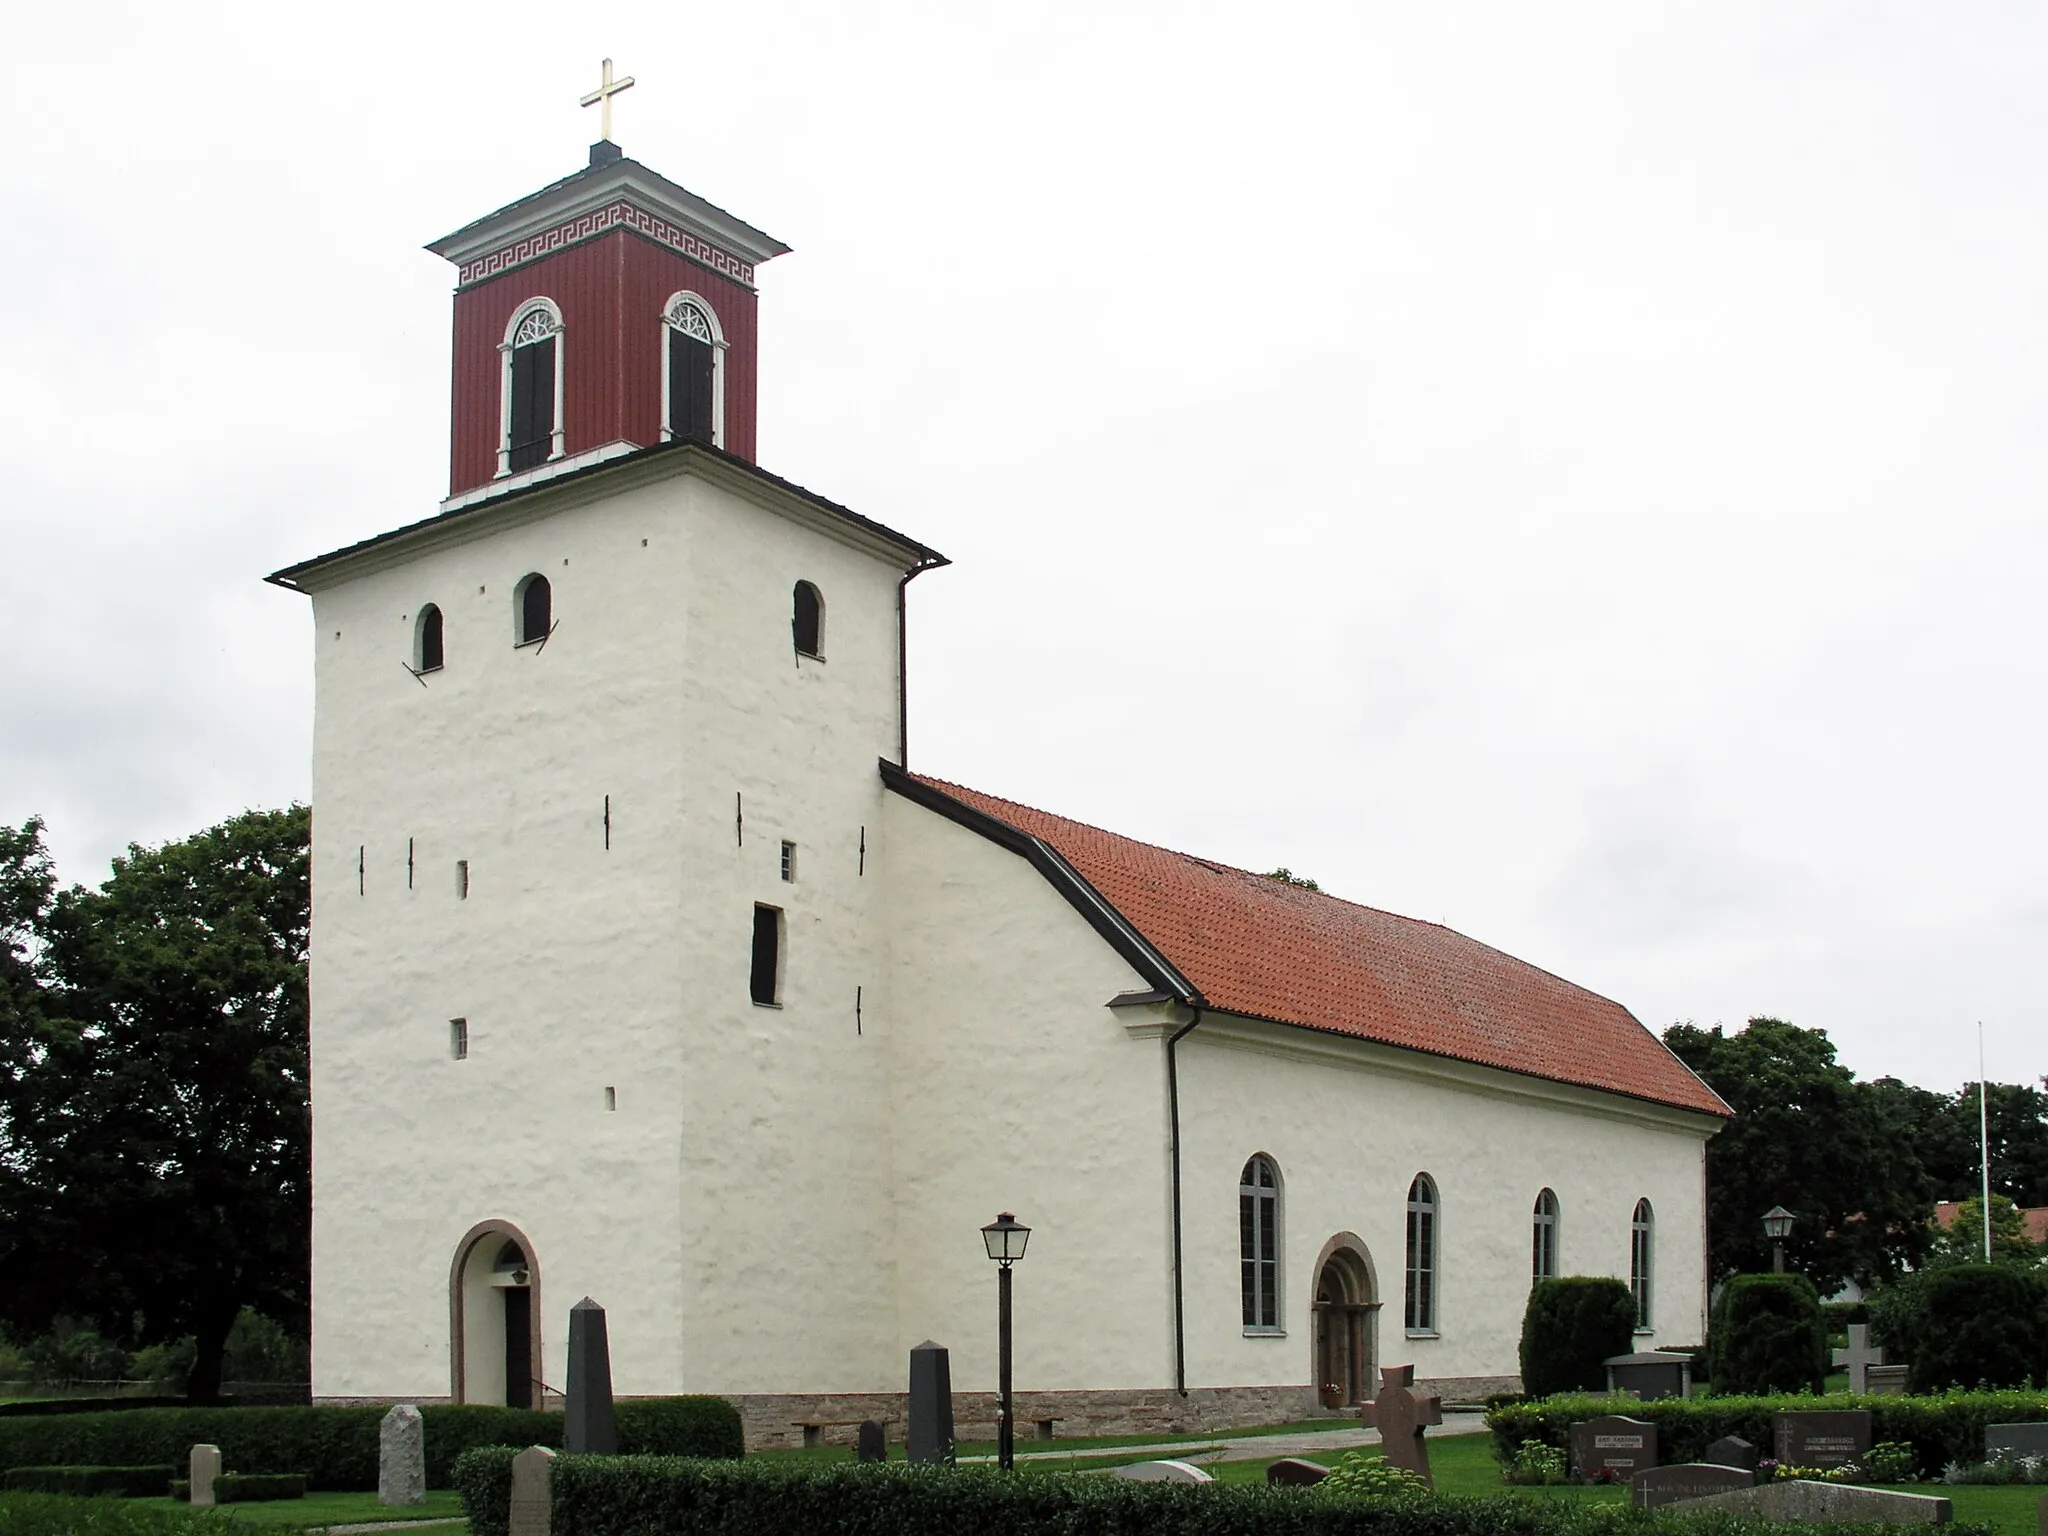 Photo showing: Glömminge kyrka / church is situated on the isle of Öland, in sv:Mörbylånga kommun.

The photo was taken by Håkan Svensson (Xauxa) the 3rd of August 2005.